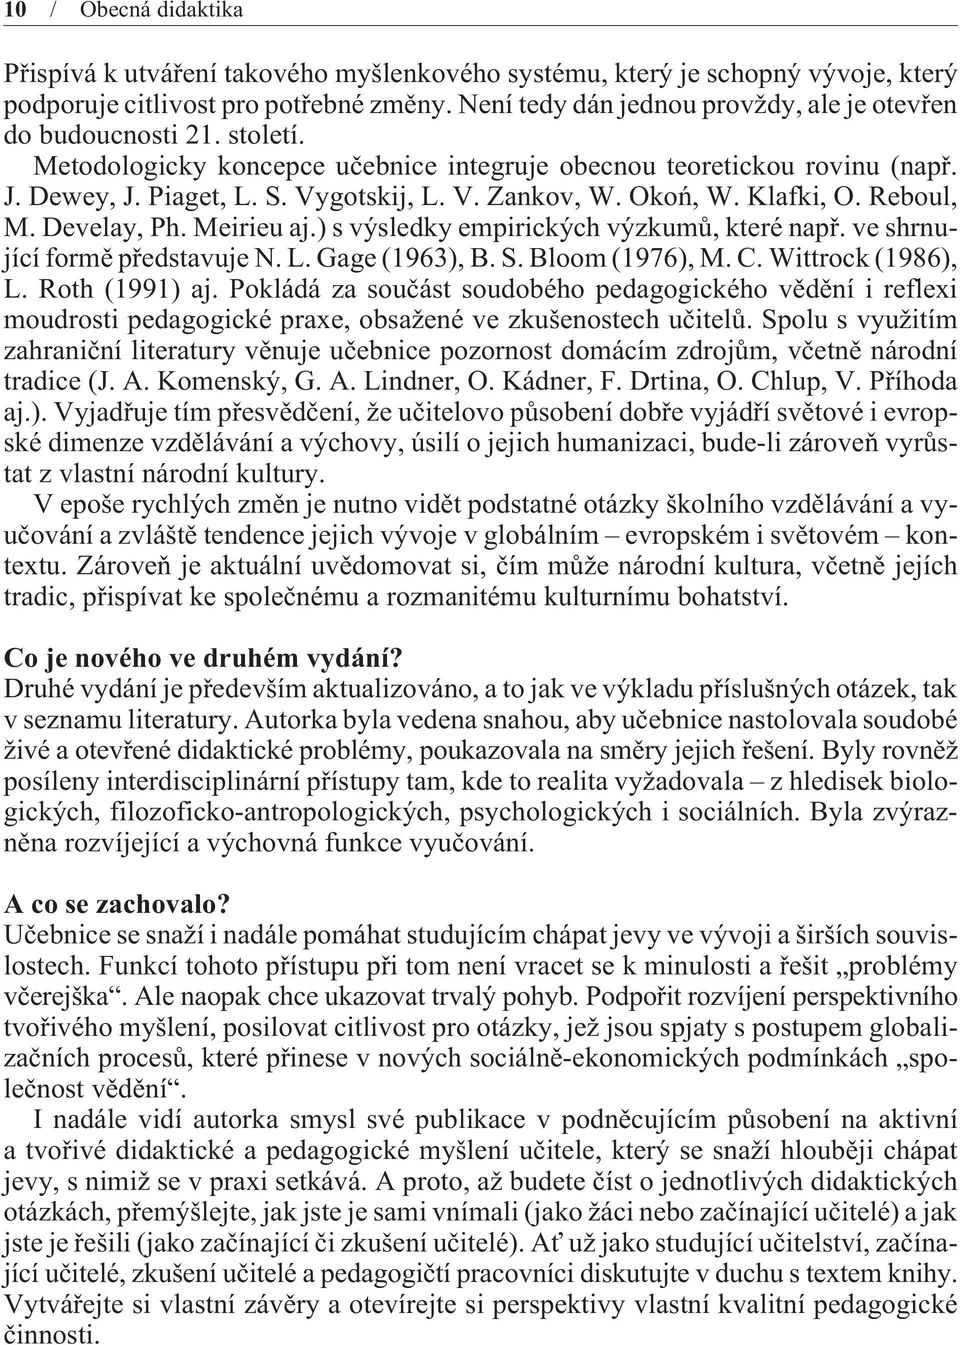 Okoñ, W. Klafki, O. Reboul, M. Develay, Ph. Meirieu aj.) s výsledky empirických výzkumù, které napø. ve shrnující formì pøedstavuje N. L. Gage (1963), B. S. Bloom (1976), M. C. Wittrock (1986), L.